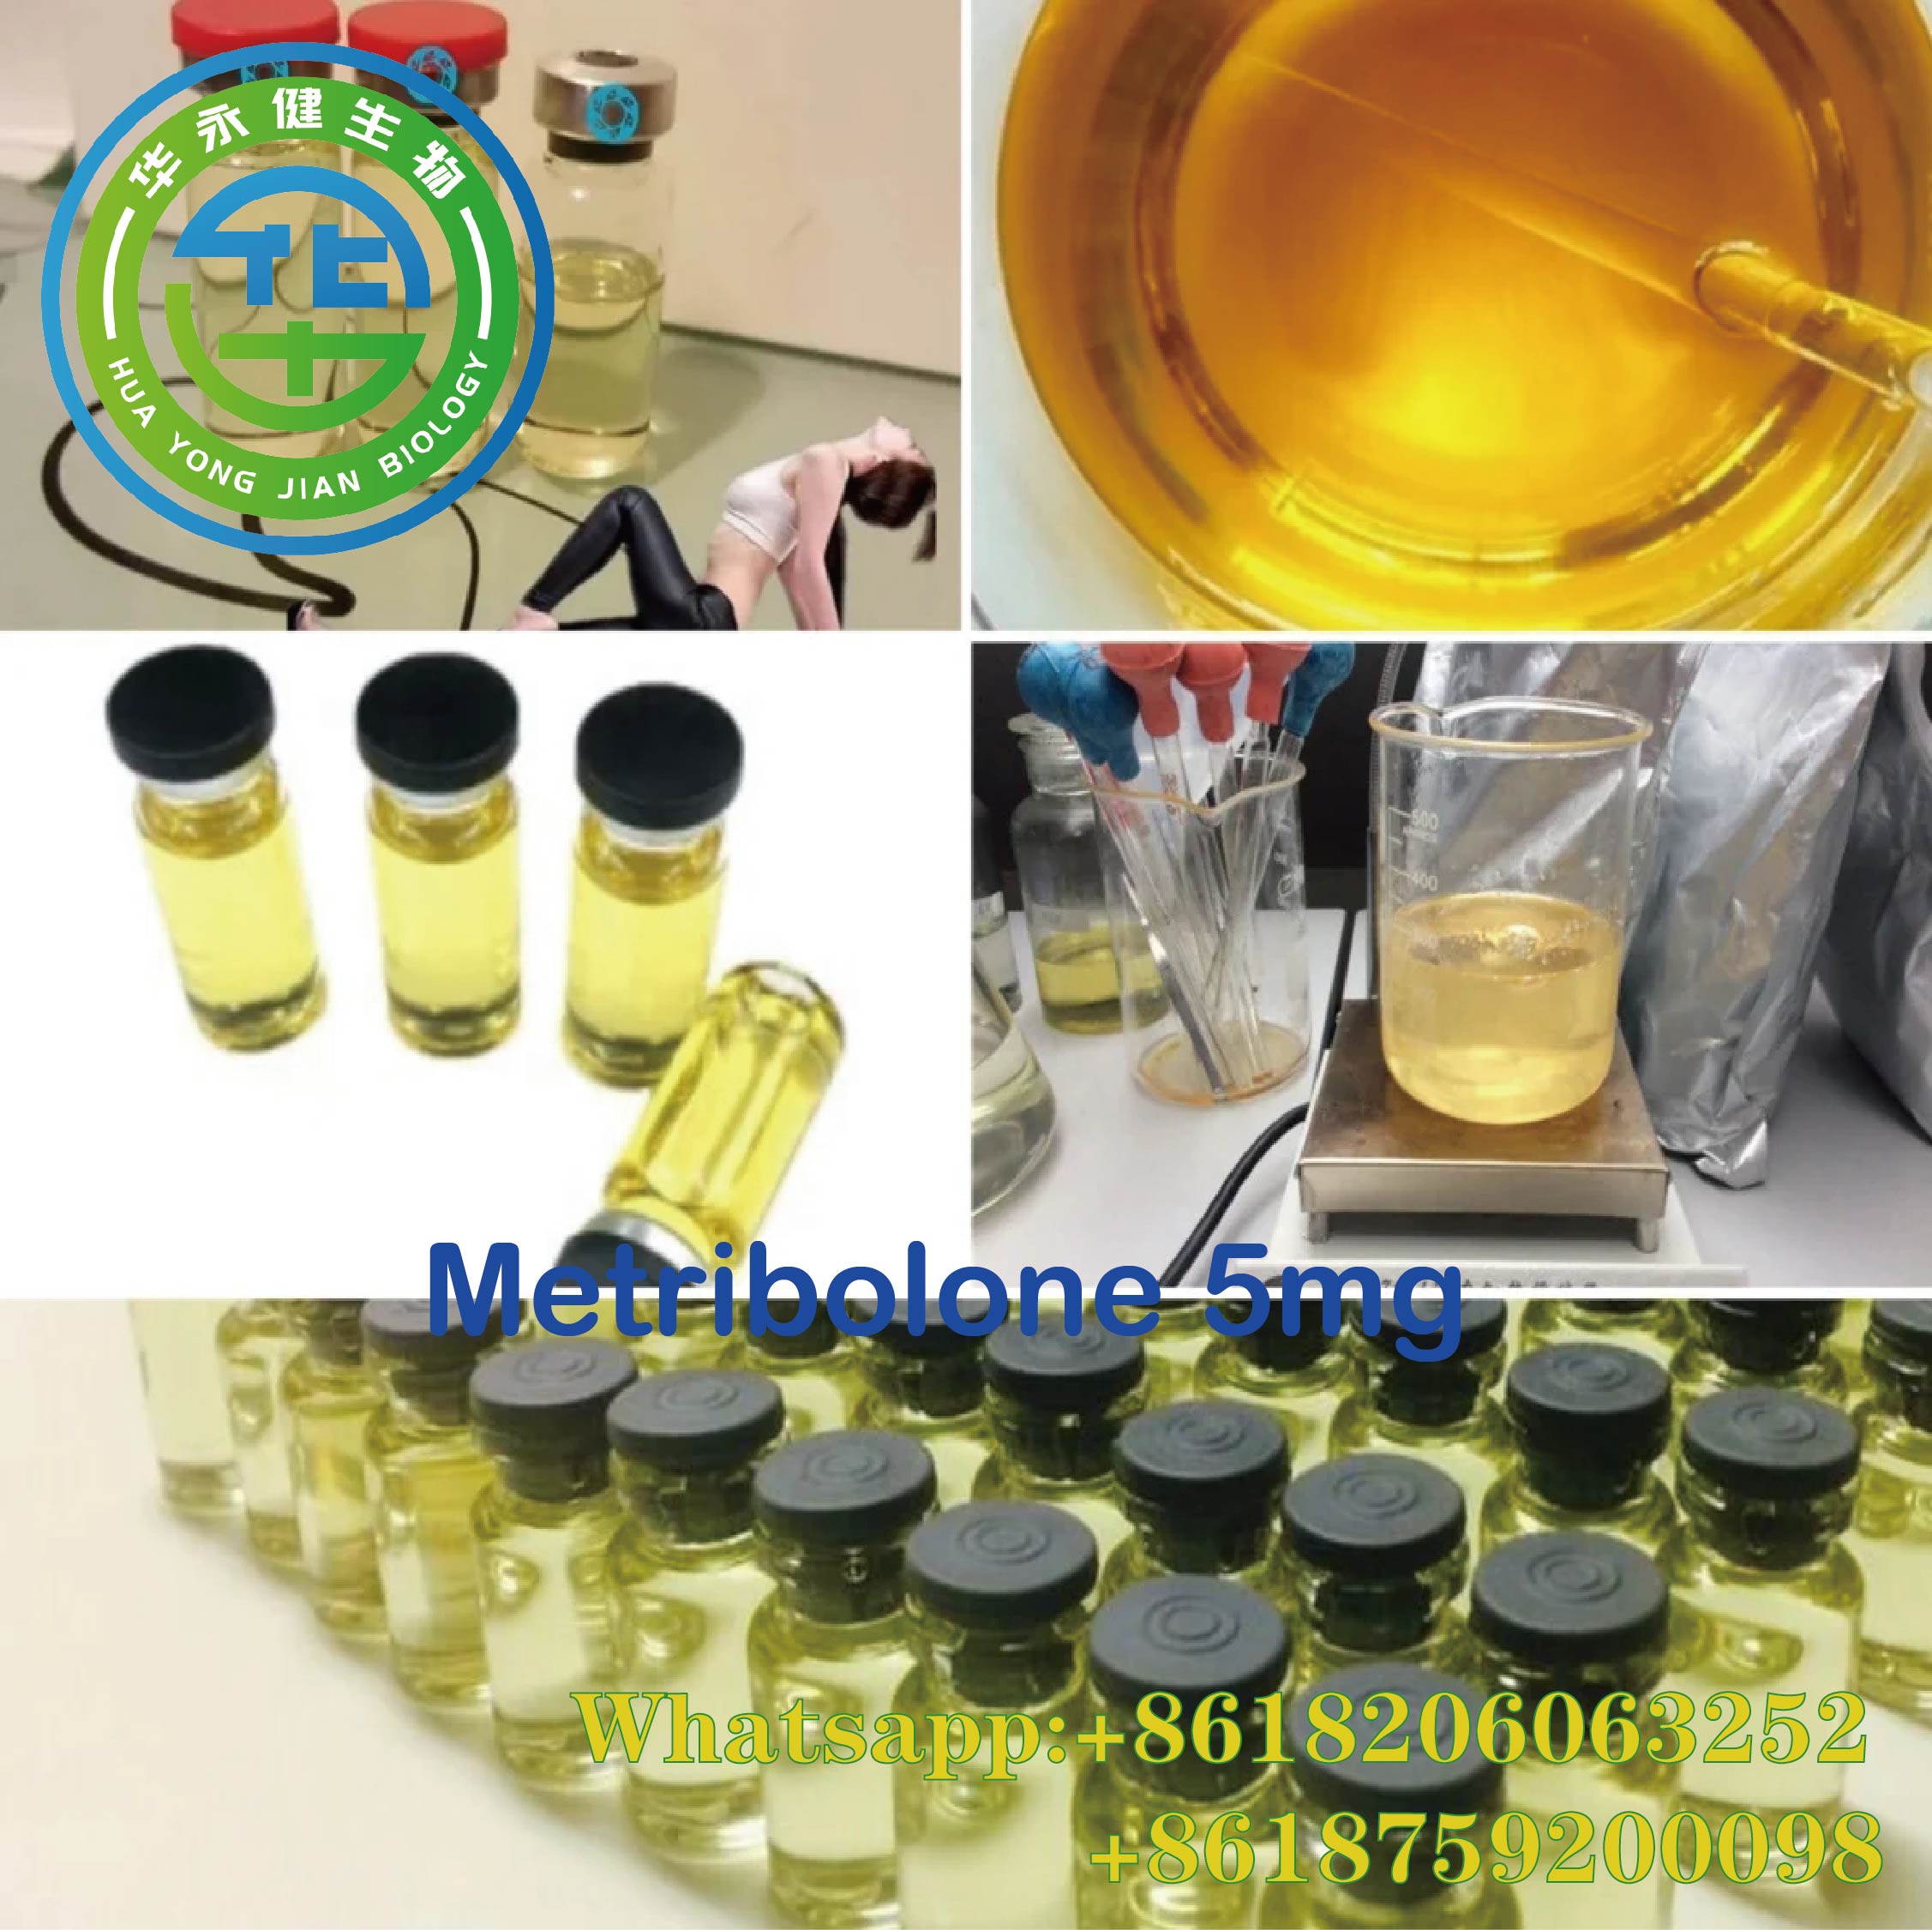 Strong Bulking Cycle Metribolone5 Methyltrienolone 5mg/ml Steroid Raw Powder Oil CAS: 965-93-5